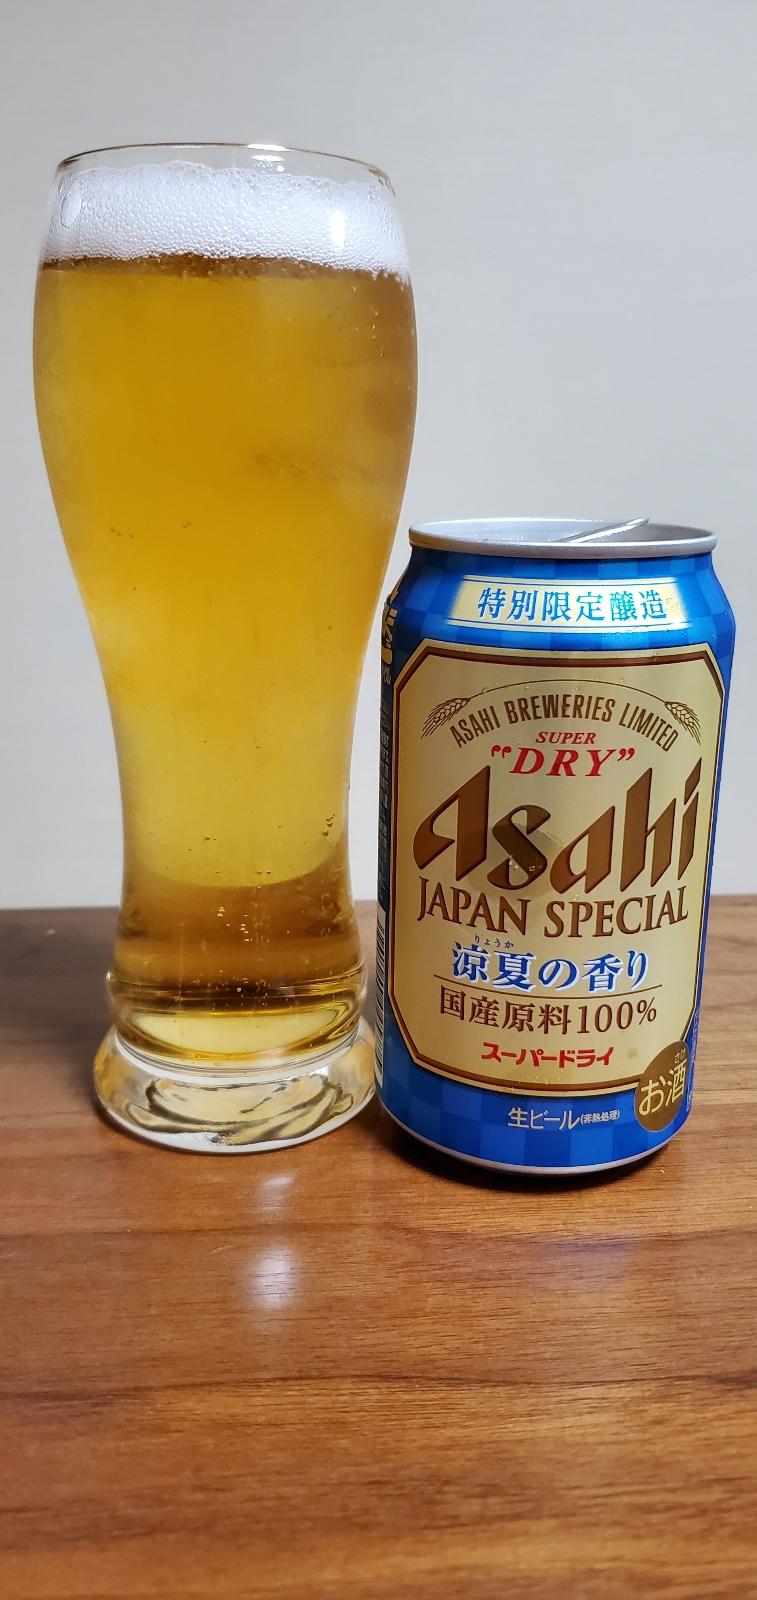 Asahi Super Dry Japan Special - Ryoka no Kaori